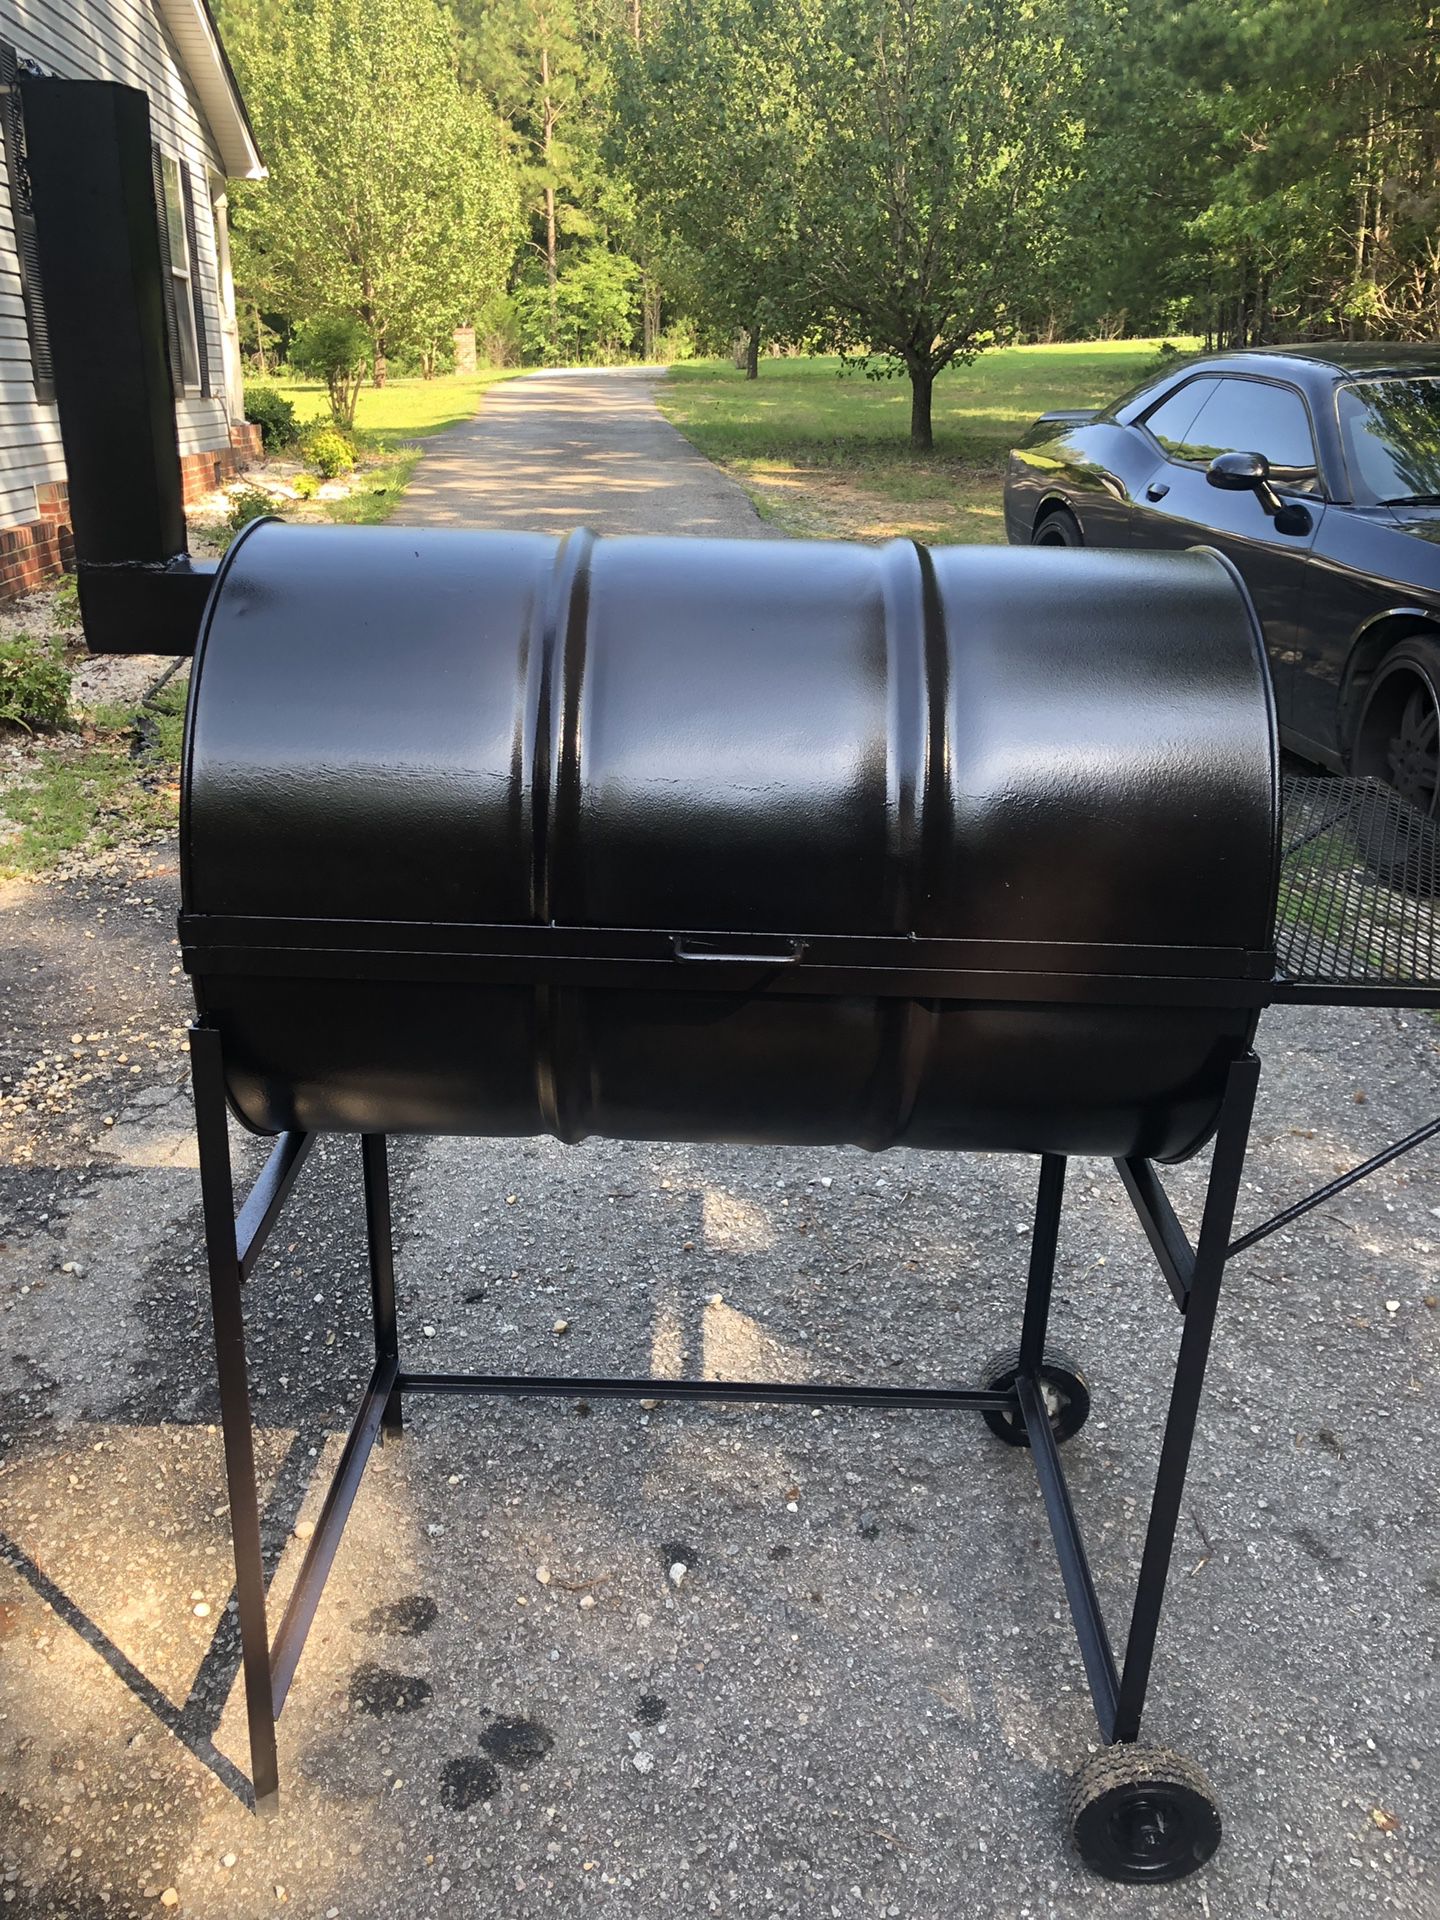 Custom 55 gallon drum bbq grill